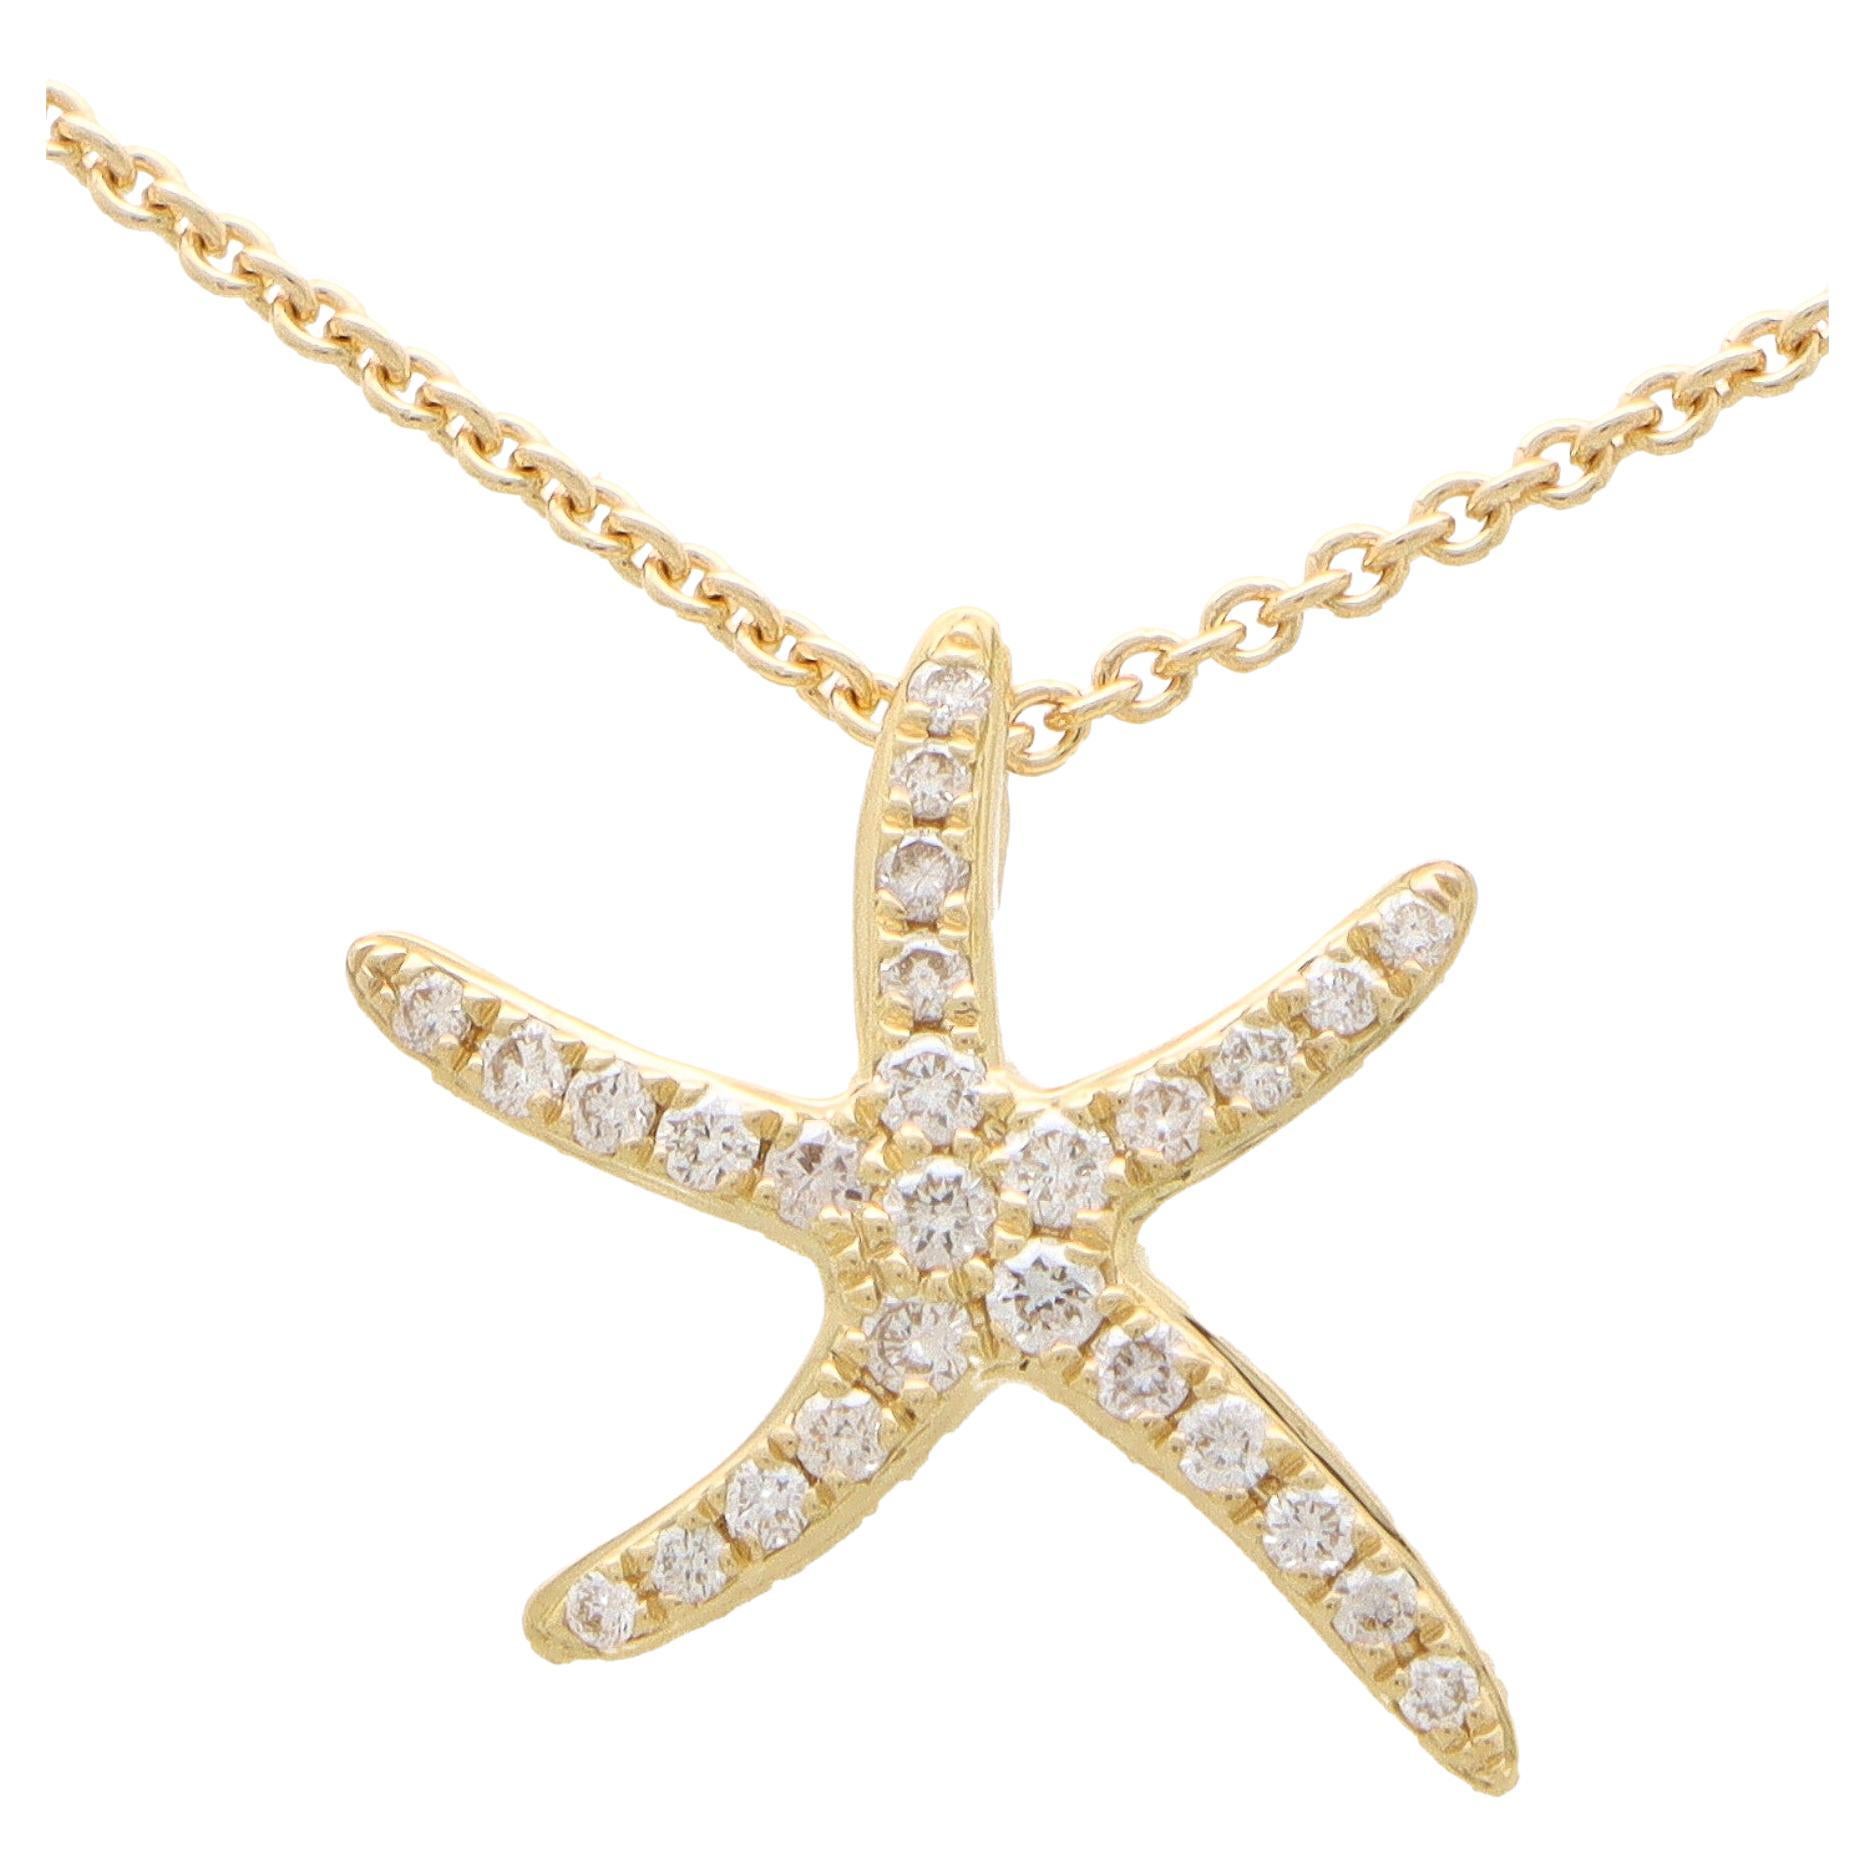 Contemporary Medium Diamond Starfish Pendant Necklace Set in 18k Yellow Gold